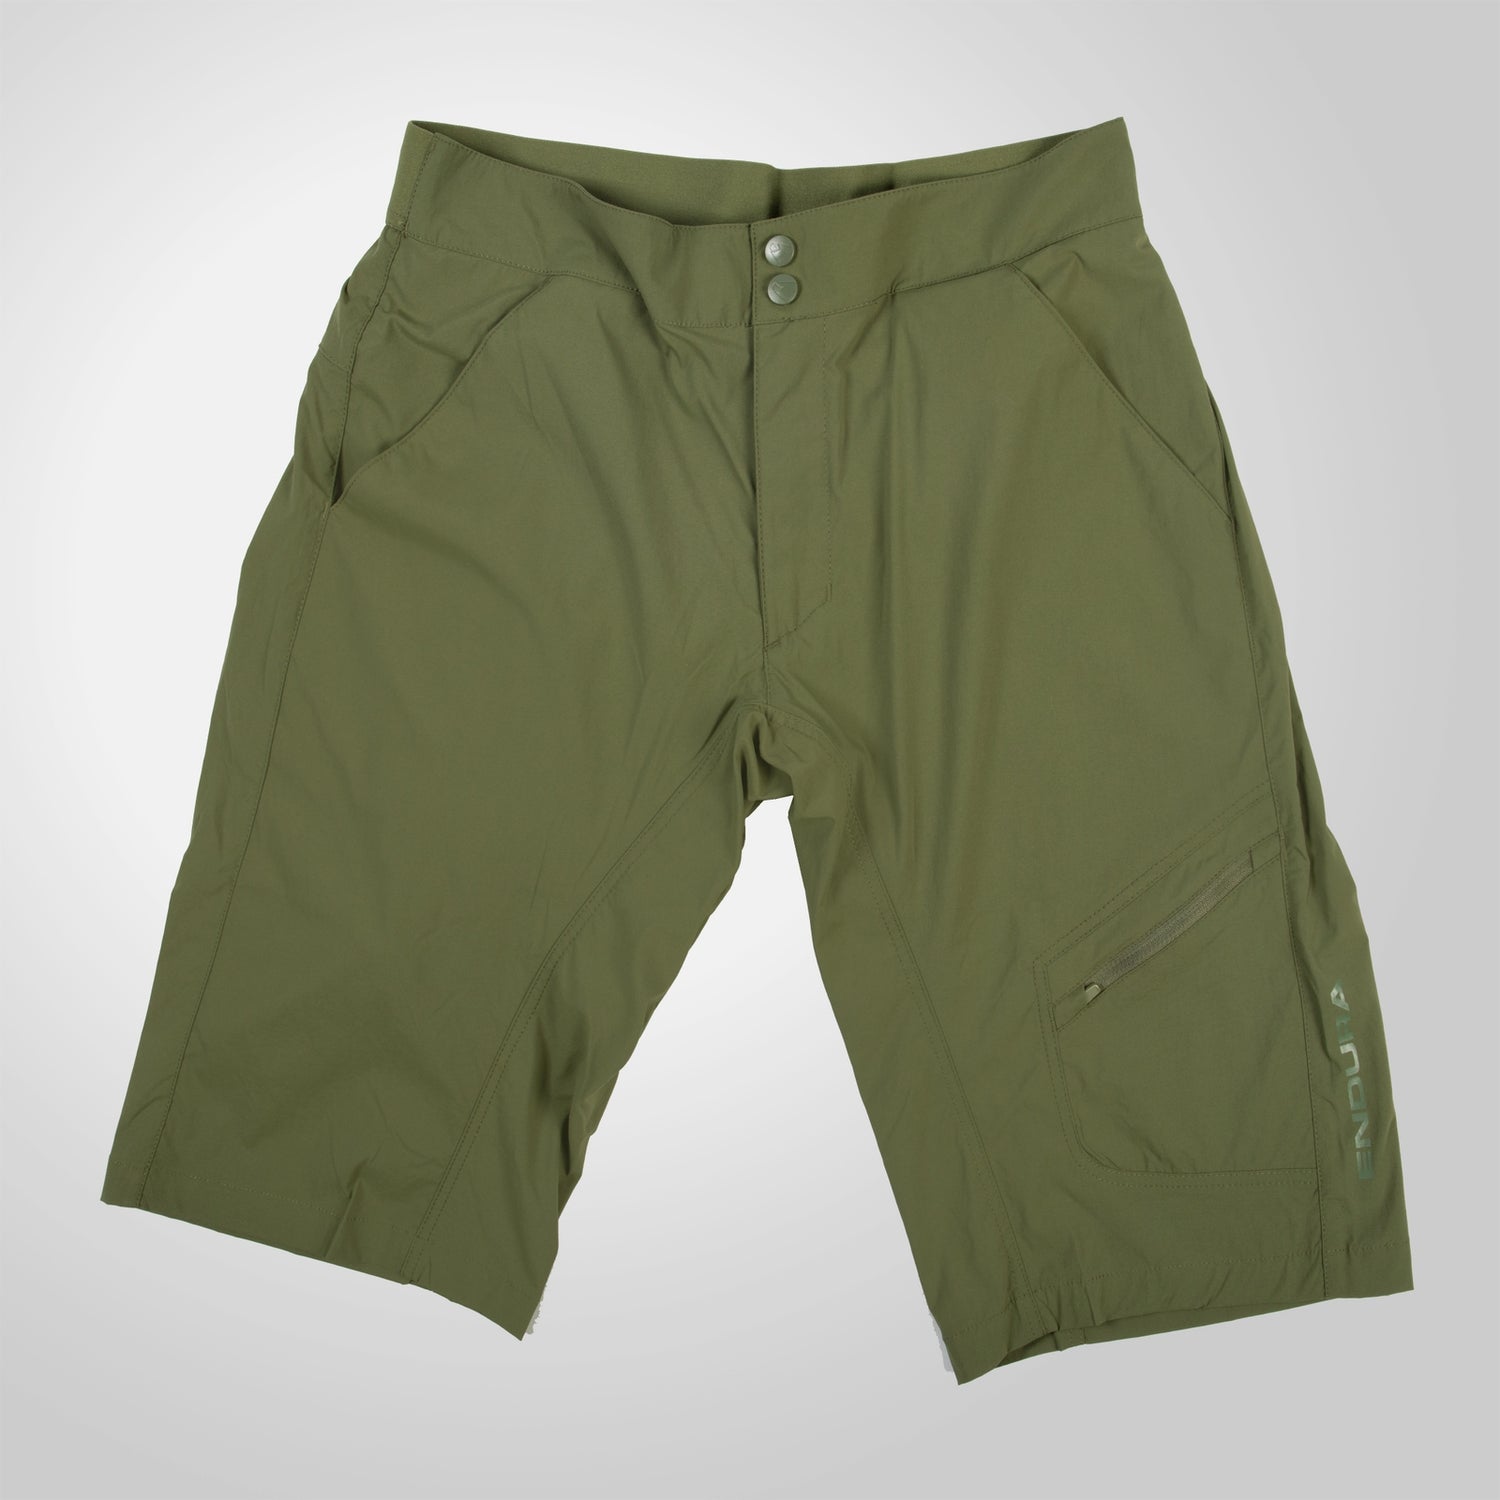 Men's Hummvee Lite Short with Liner - Olive Green - XXL